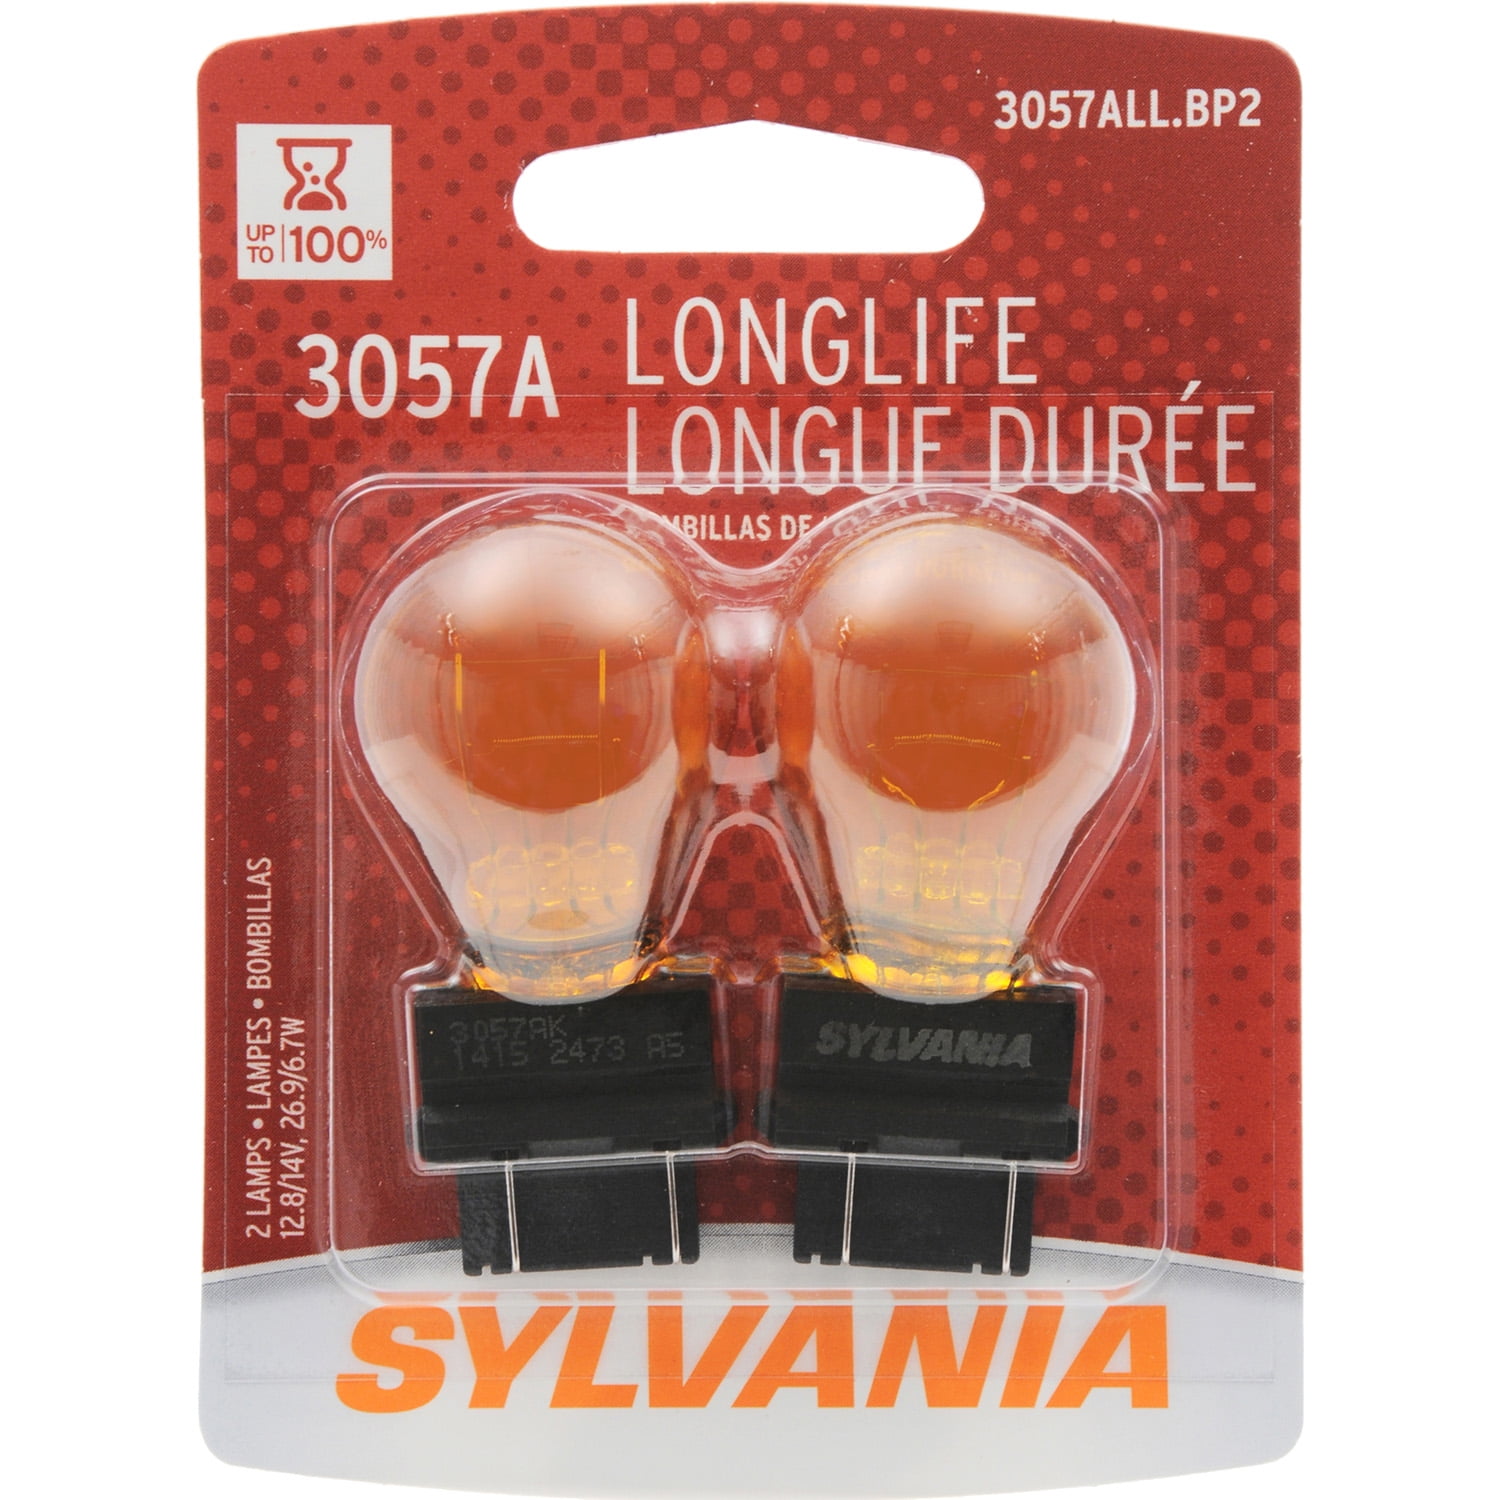 Osram Sylvania P21W equivalent 12V 21W S8 BA15S Indicator Lamp